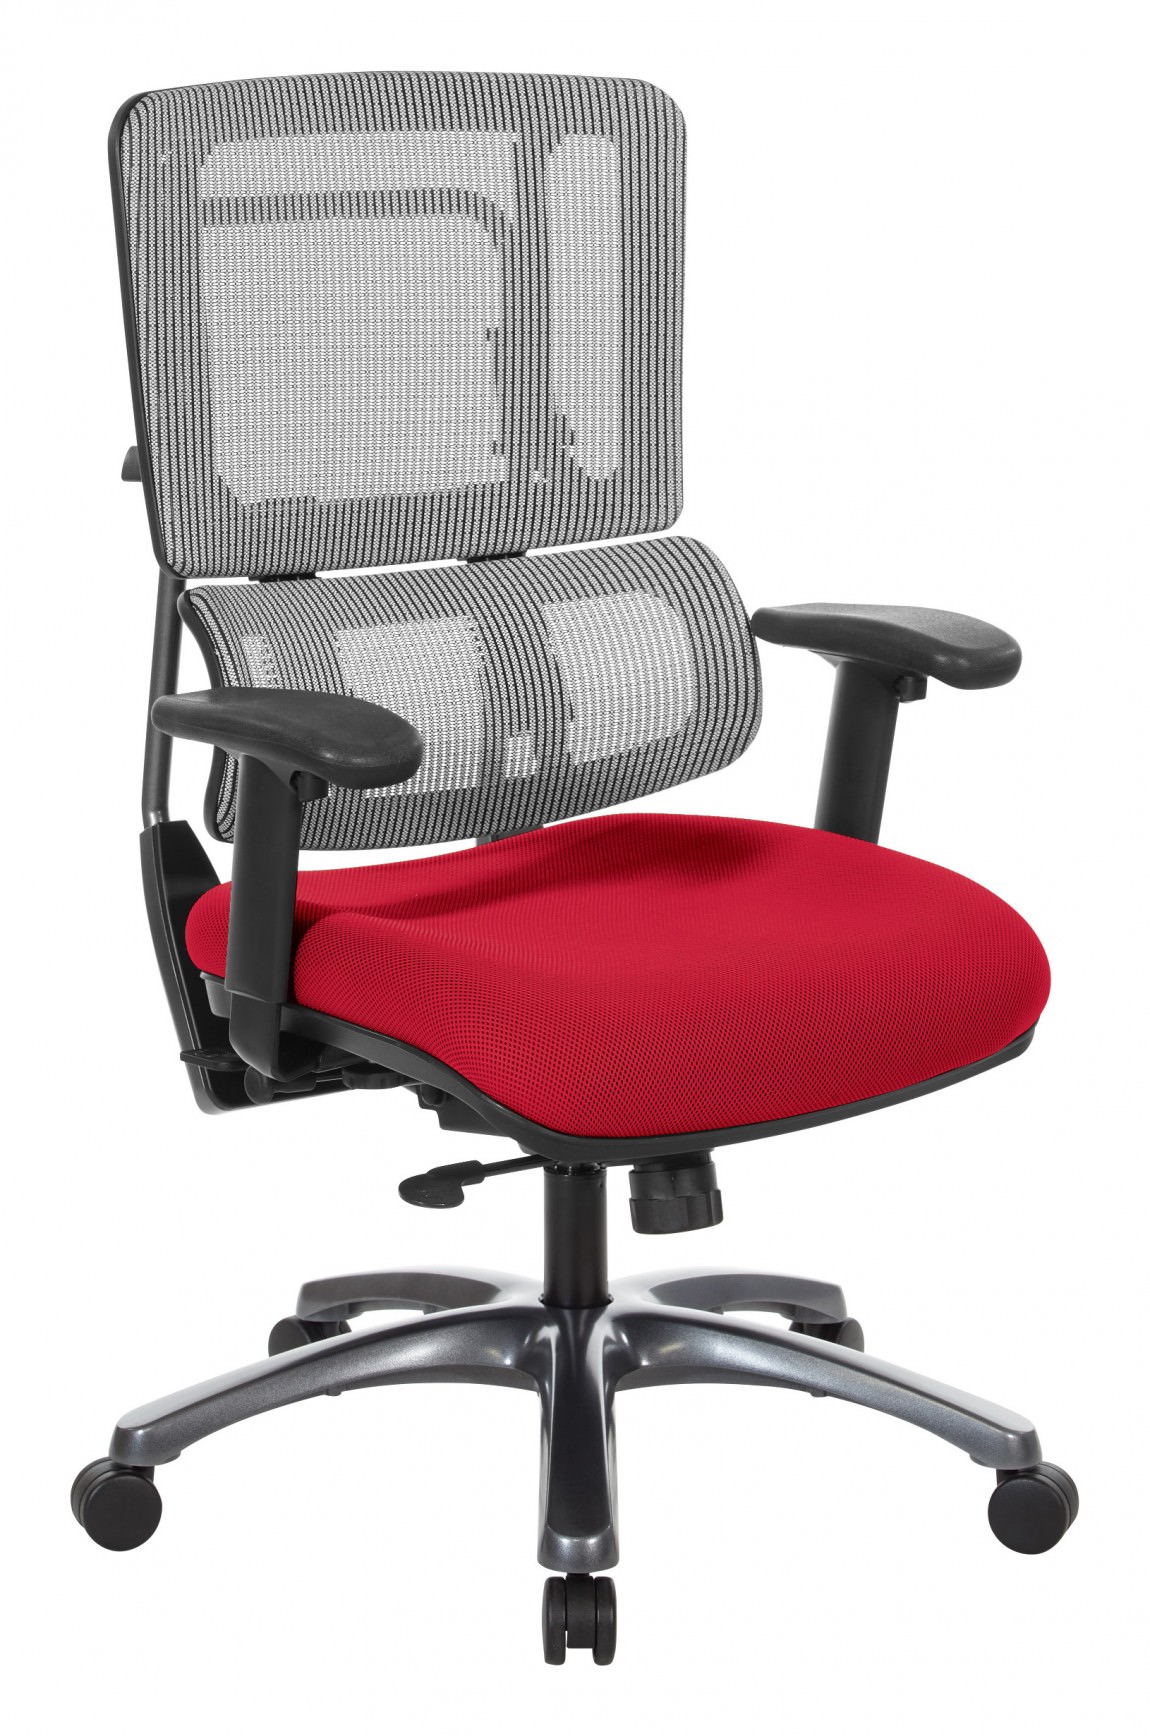 Adjustable Height Task Chair